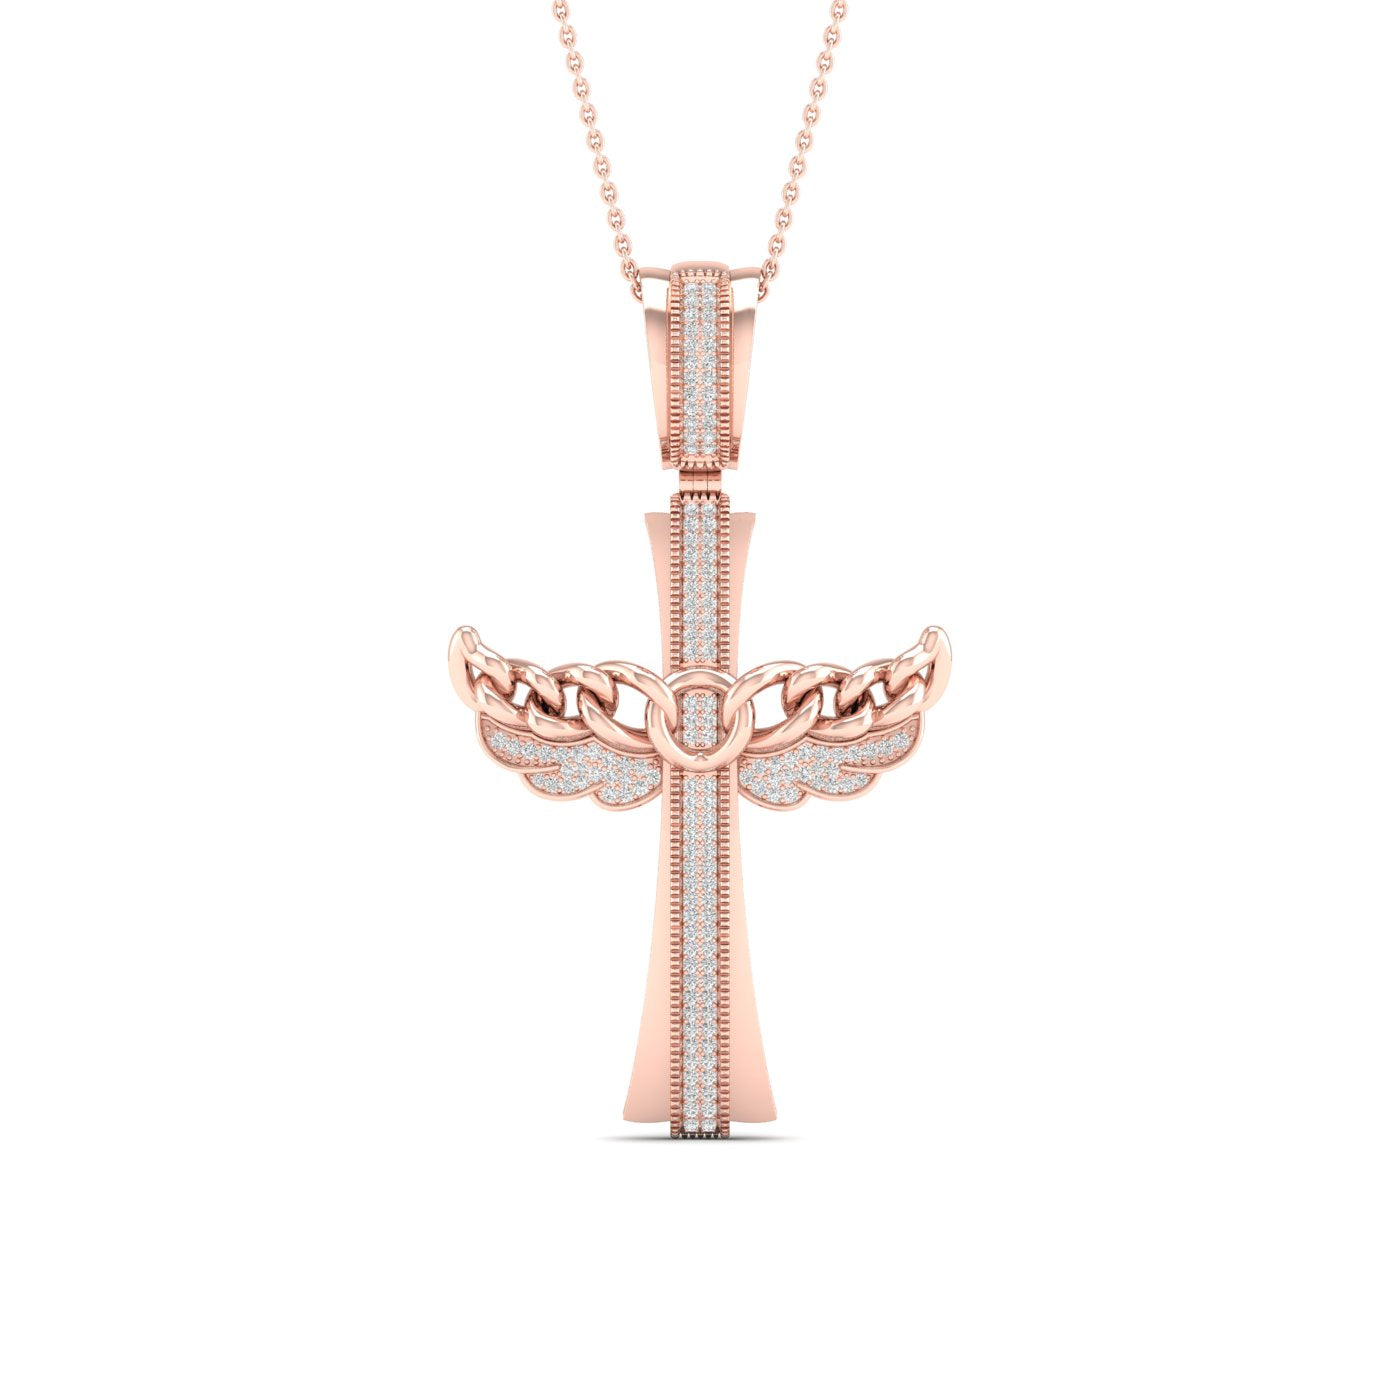 Colgante celestial con cruz angelical de diamantes de 0,43 quilates en oro rosa de 10 quilates